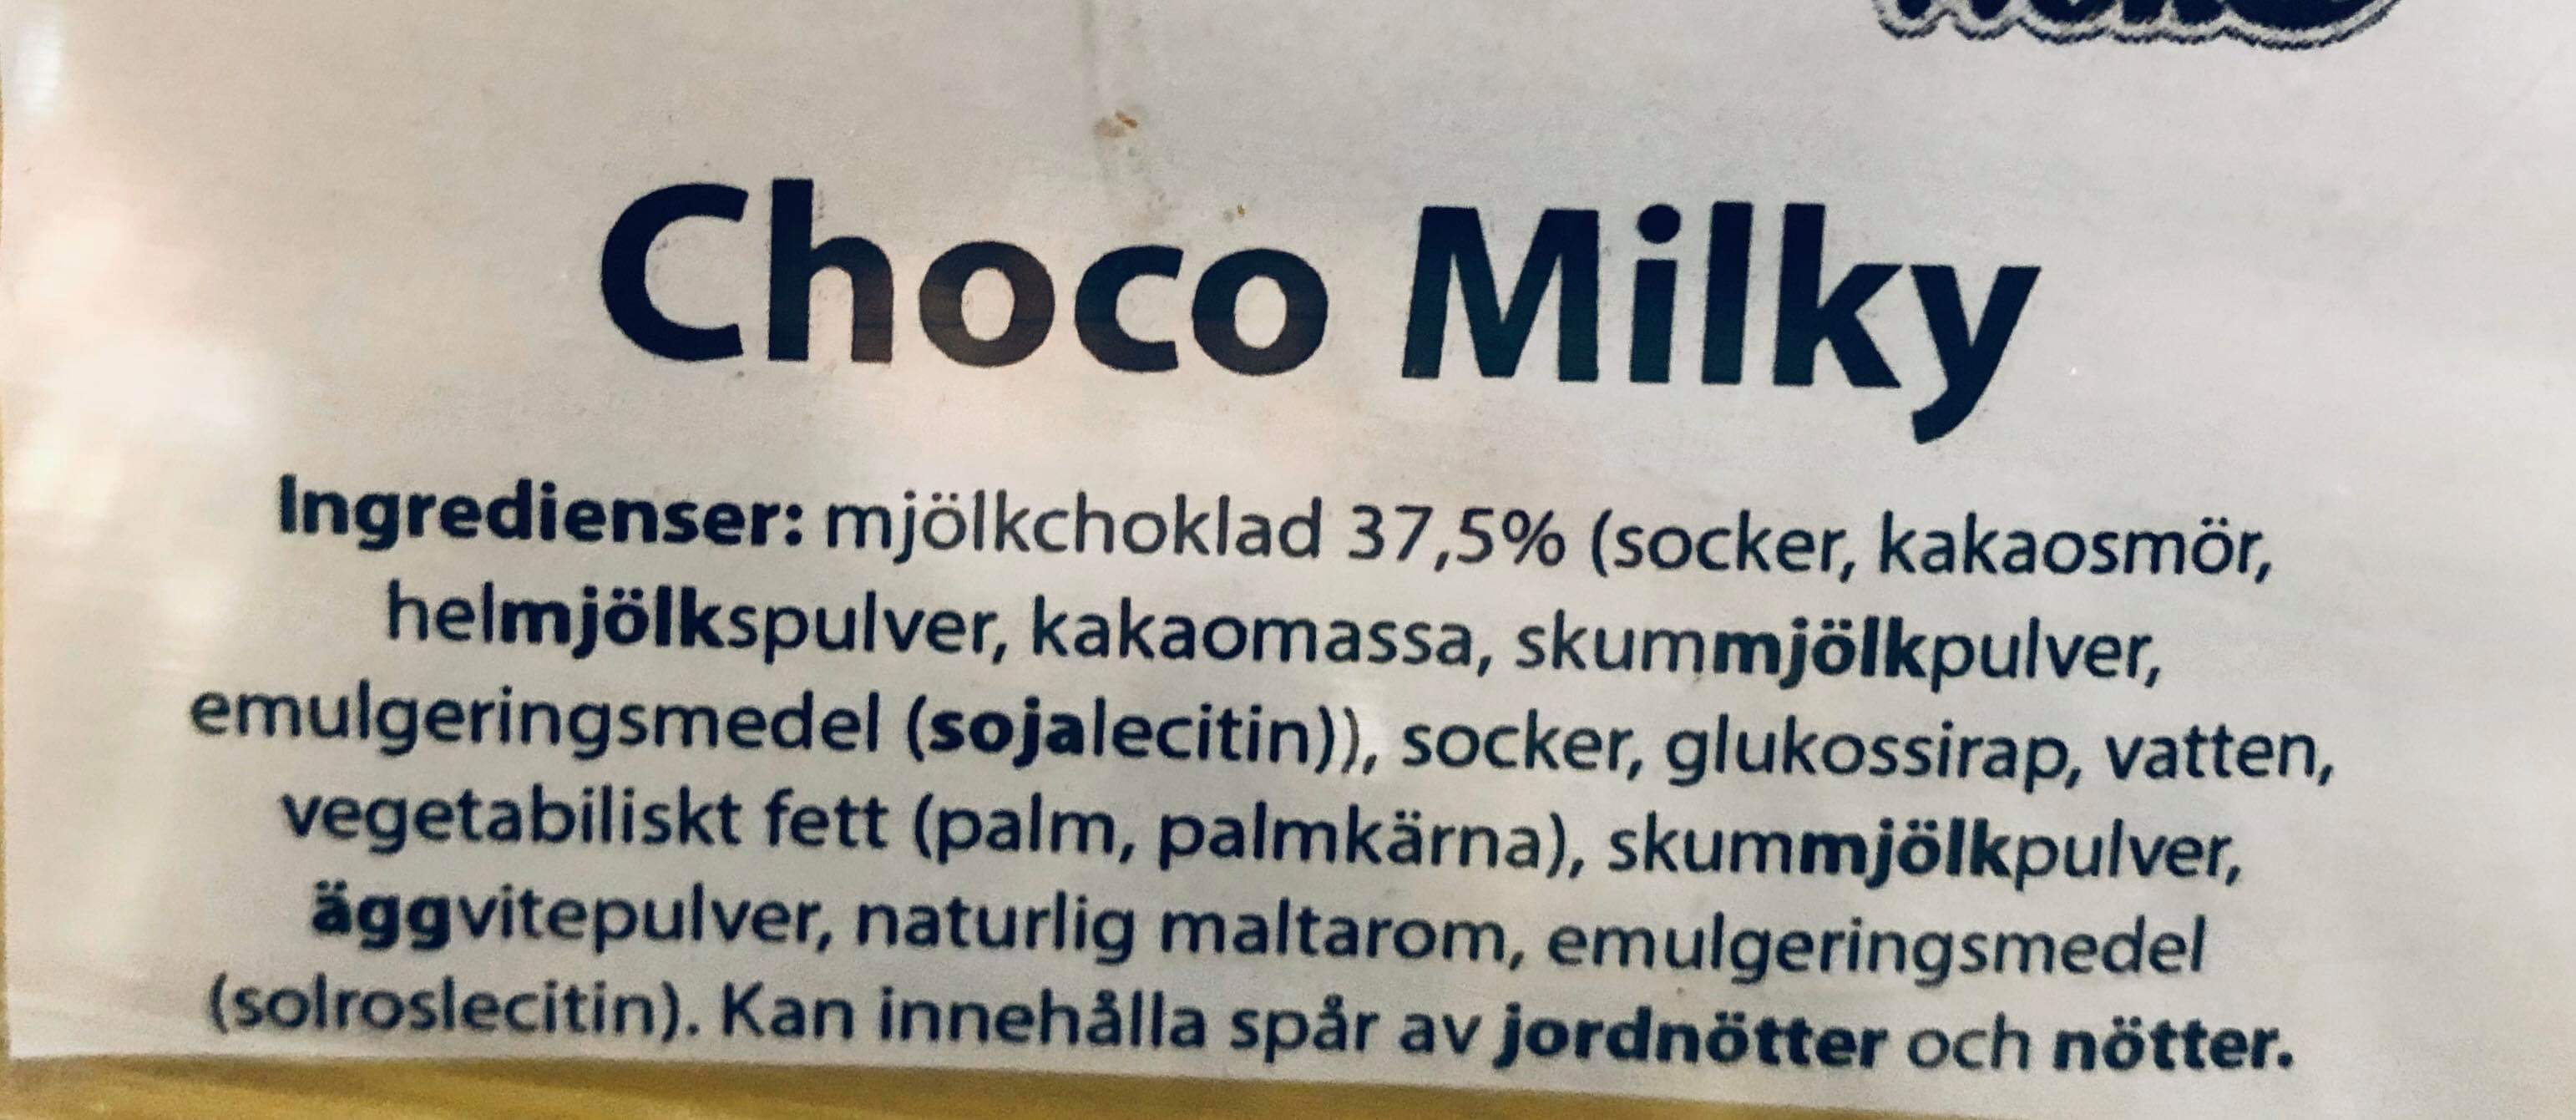 Choco milky